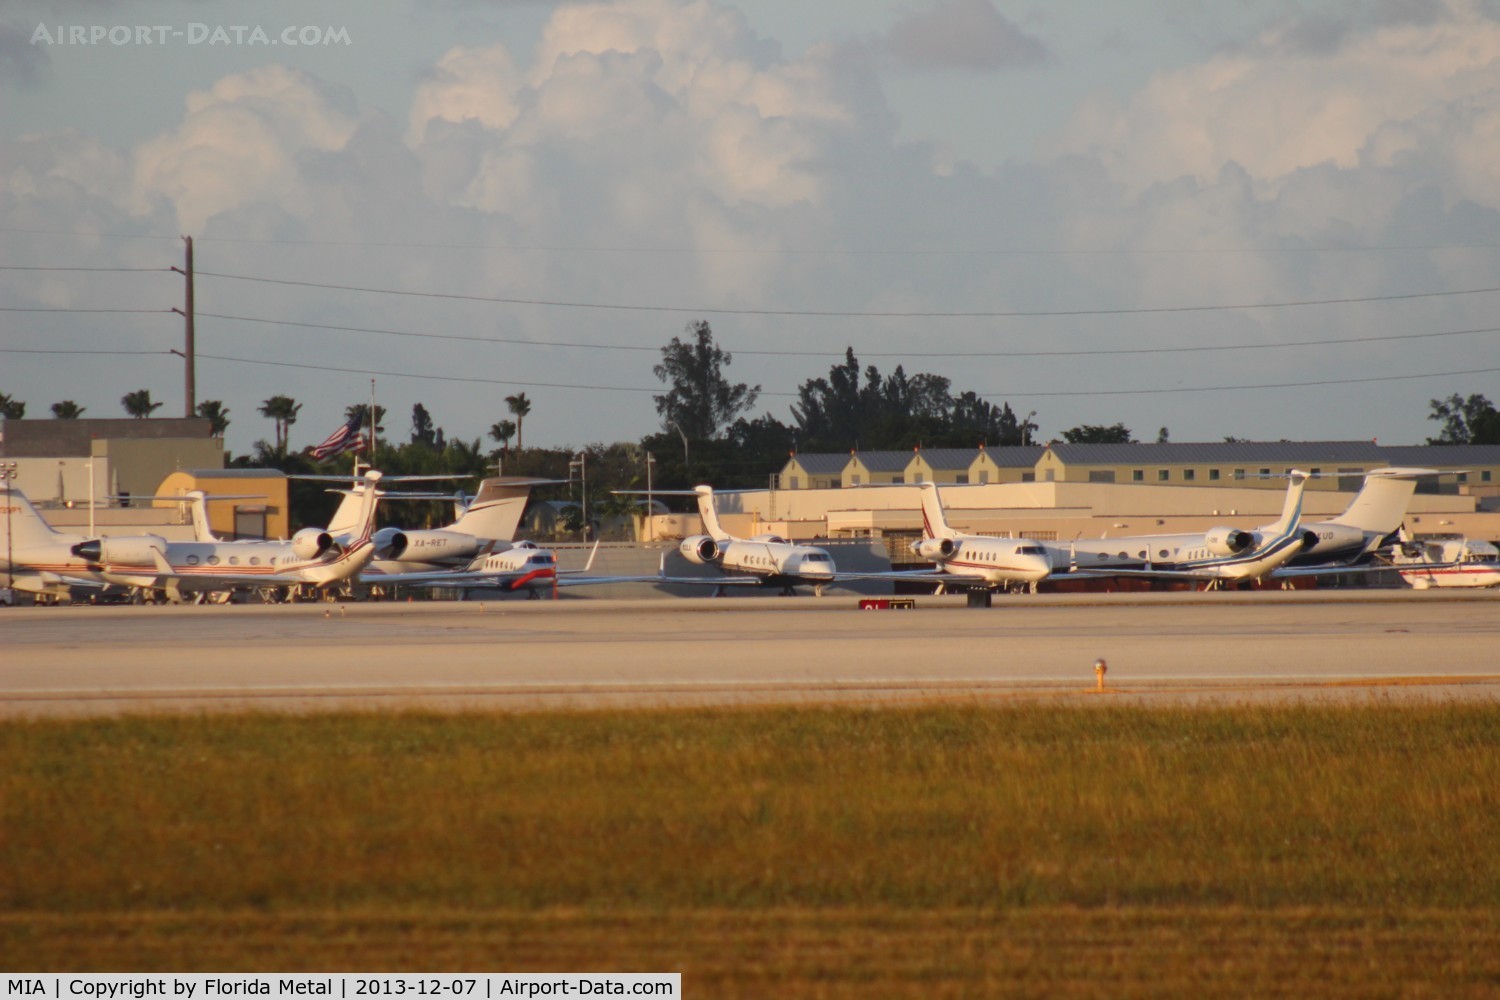 Miami International Airport (MIA) - Crowded Landmark Aviation FBO, several Gulfstreams in for the art show on Miami Beach